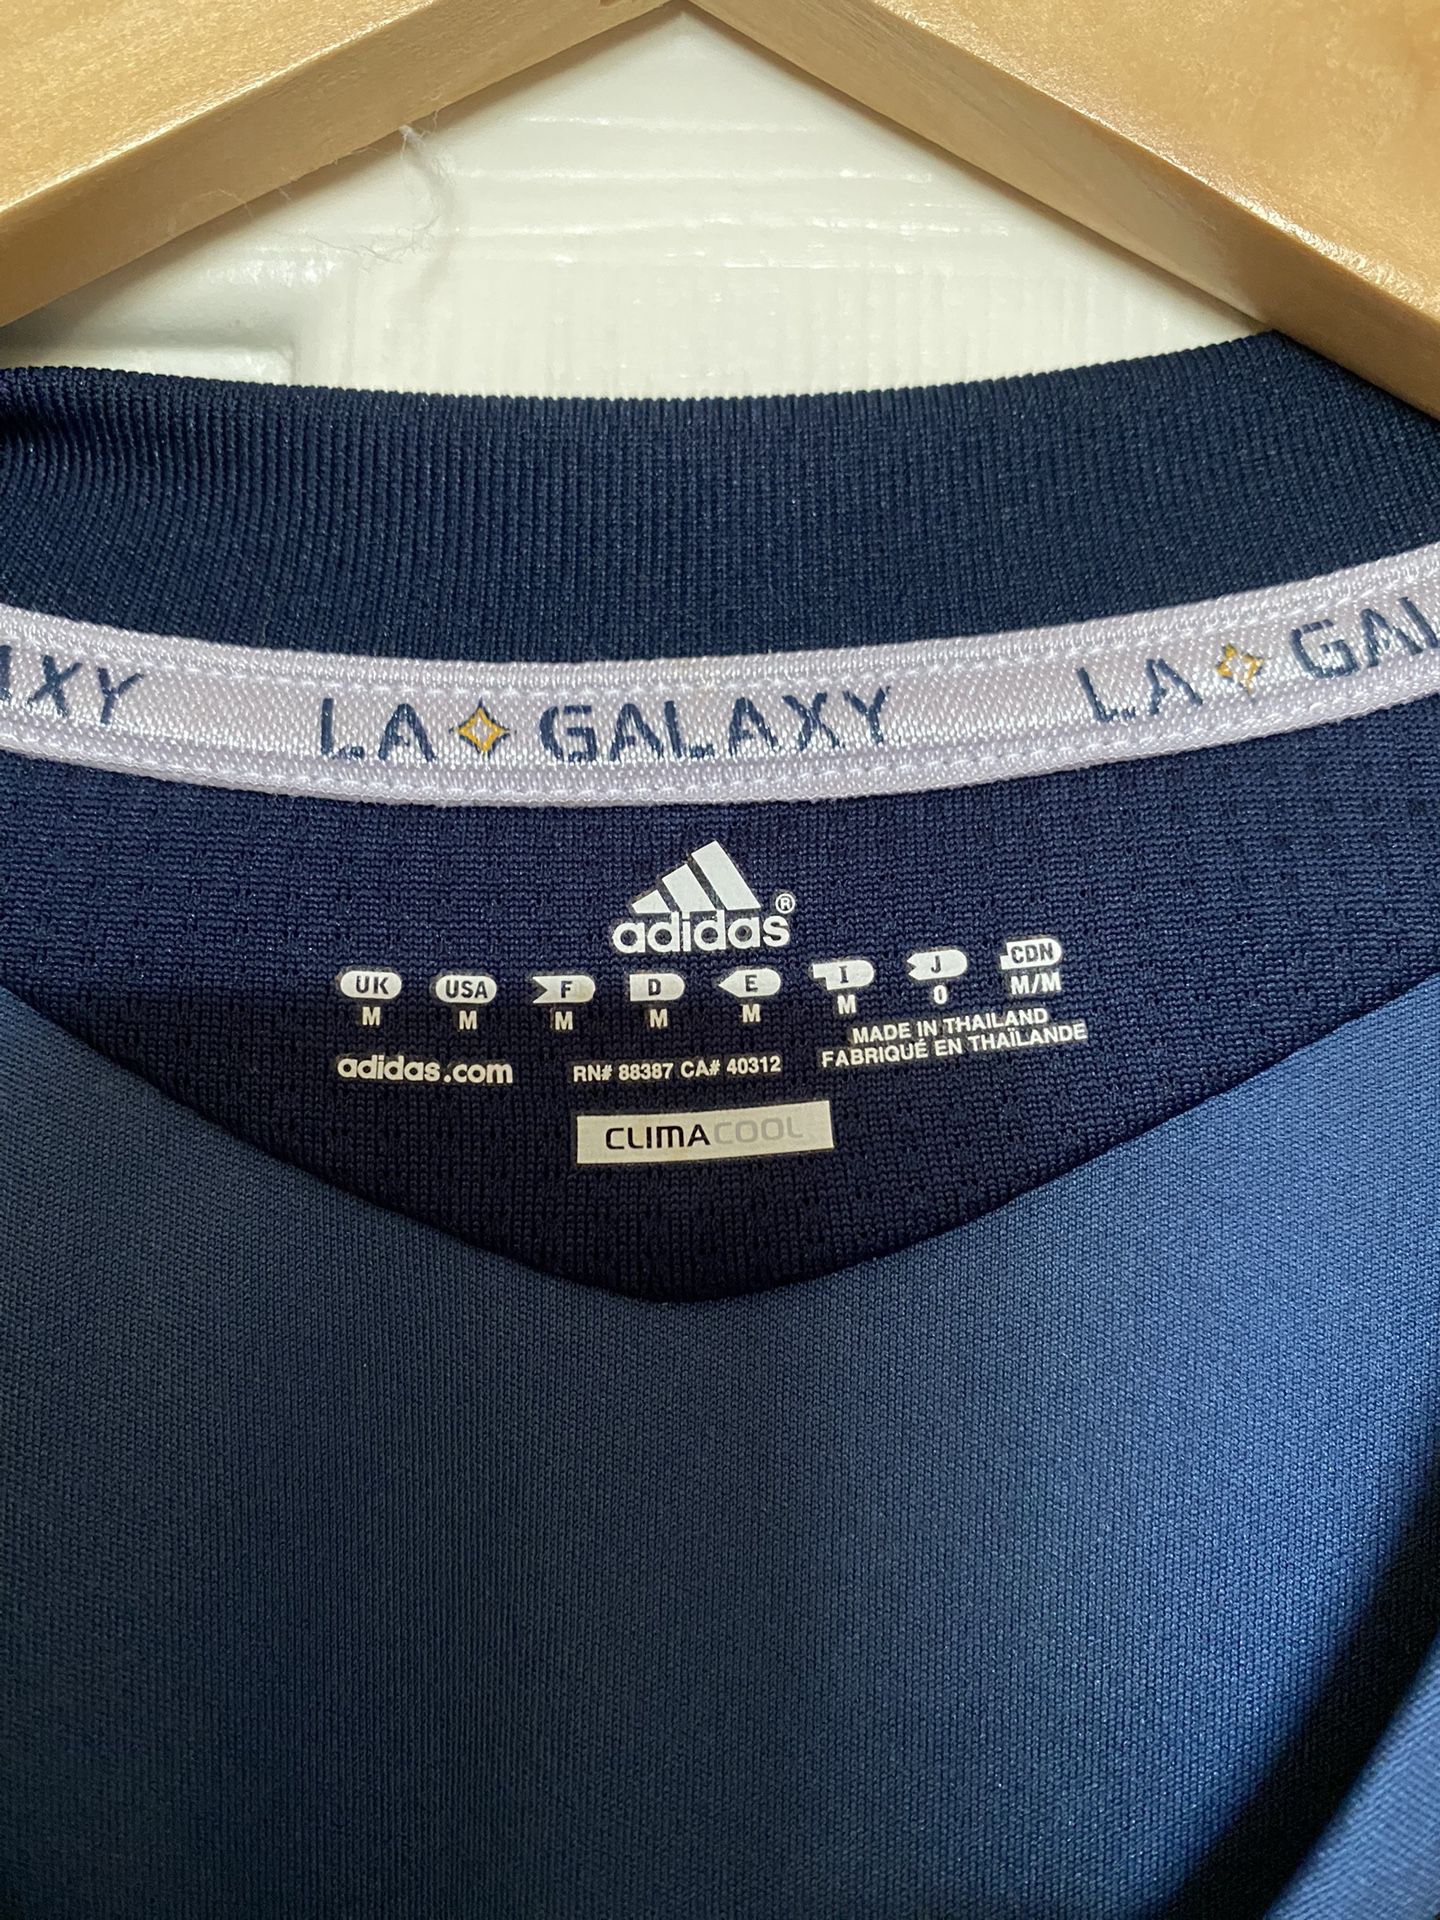 adidas Launch LA Galaxy 2019 Away Jersey - SoccerBible